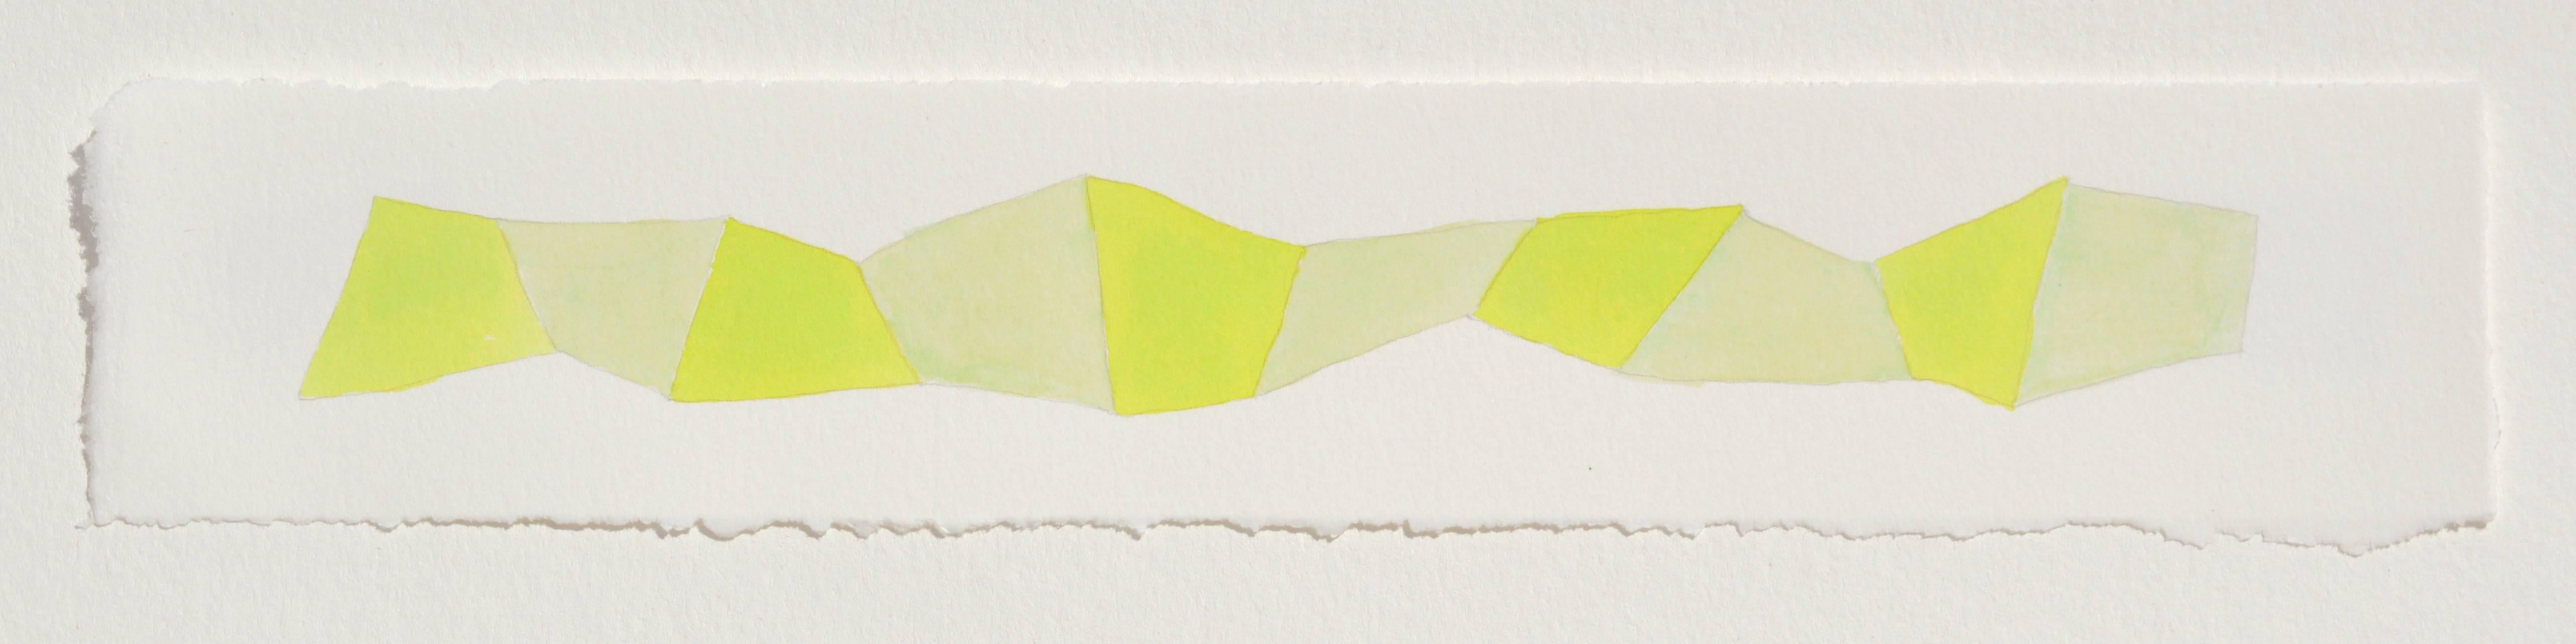 Karen Schiff, Word Snake E, 2014, aquarelle, graphite